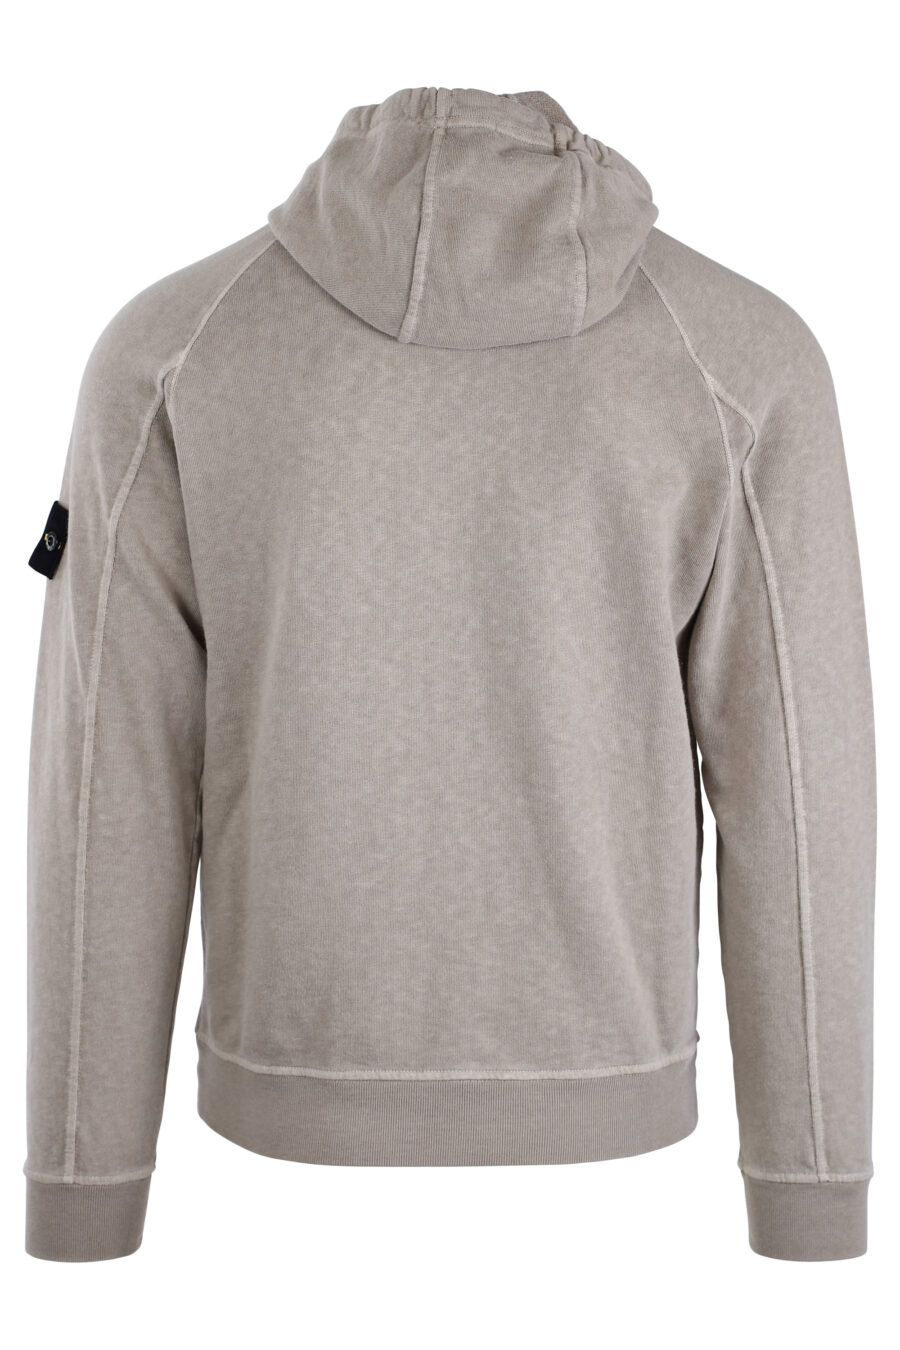 Beige sweatshirt with patch - IMG 1690